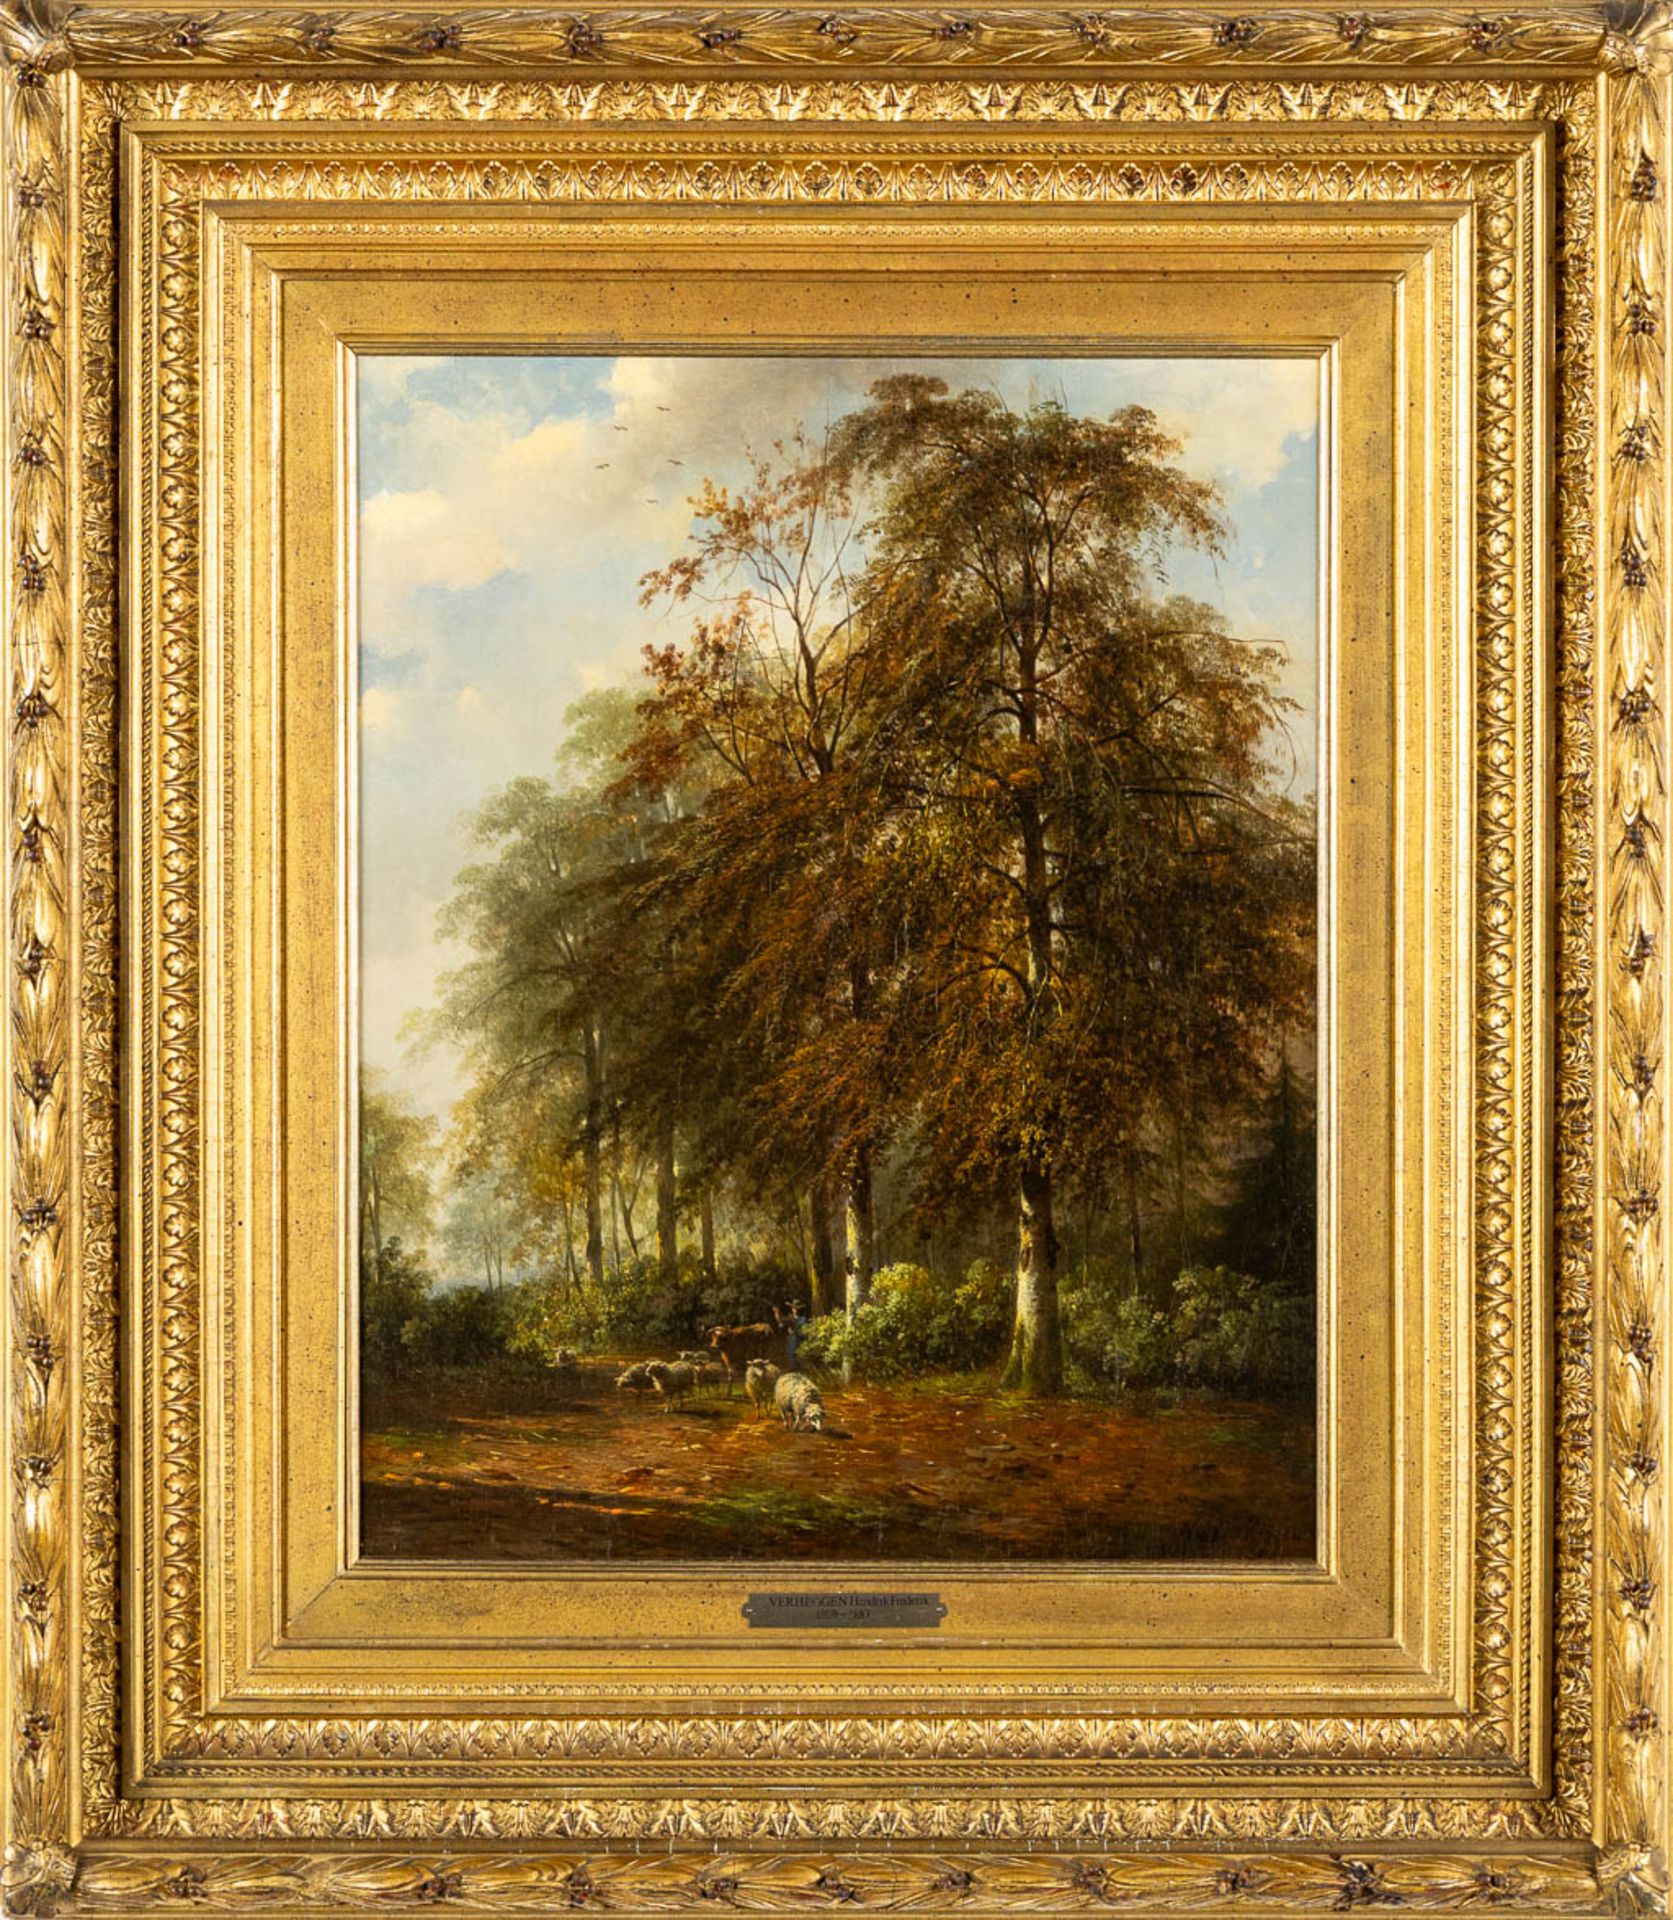 Hendrik VERHEGGEN (1809-1883) 'Sheep in a forest' Barbizon School, oil on canvas. (W:46 x H:58 cm) - Image 3 of 8